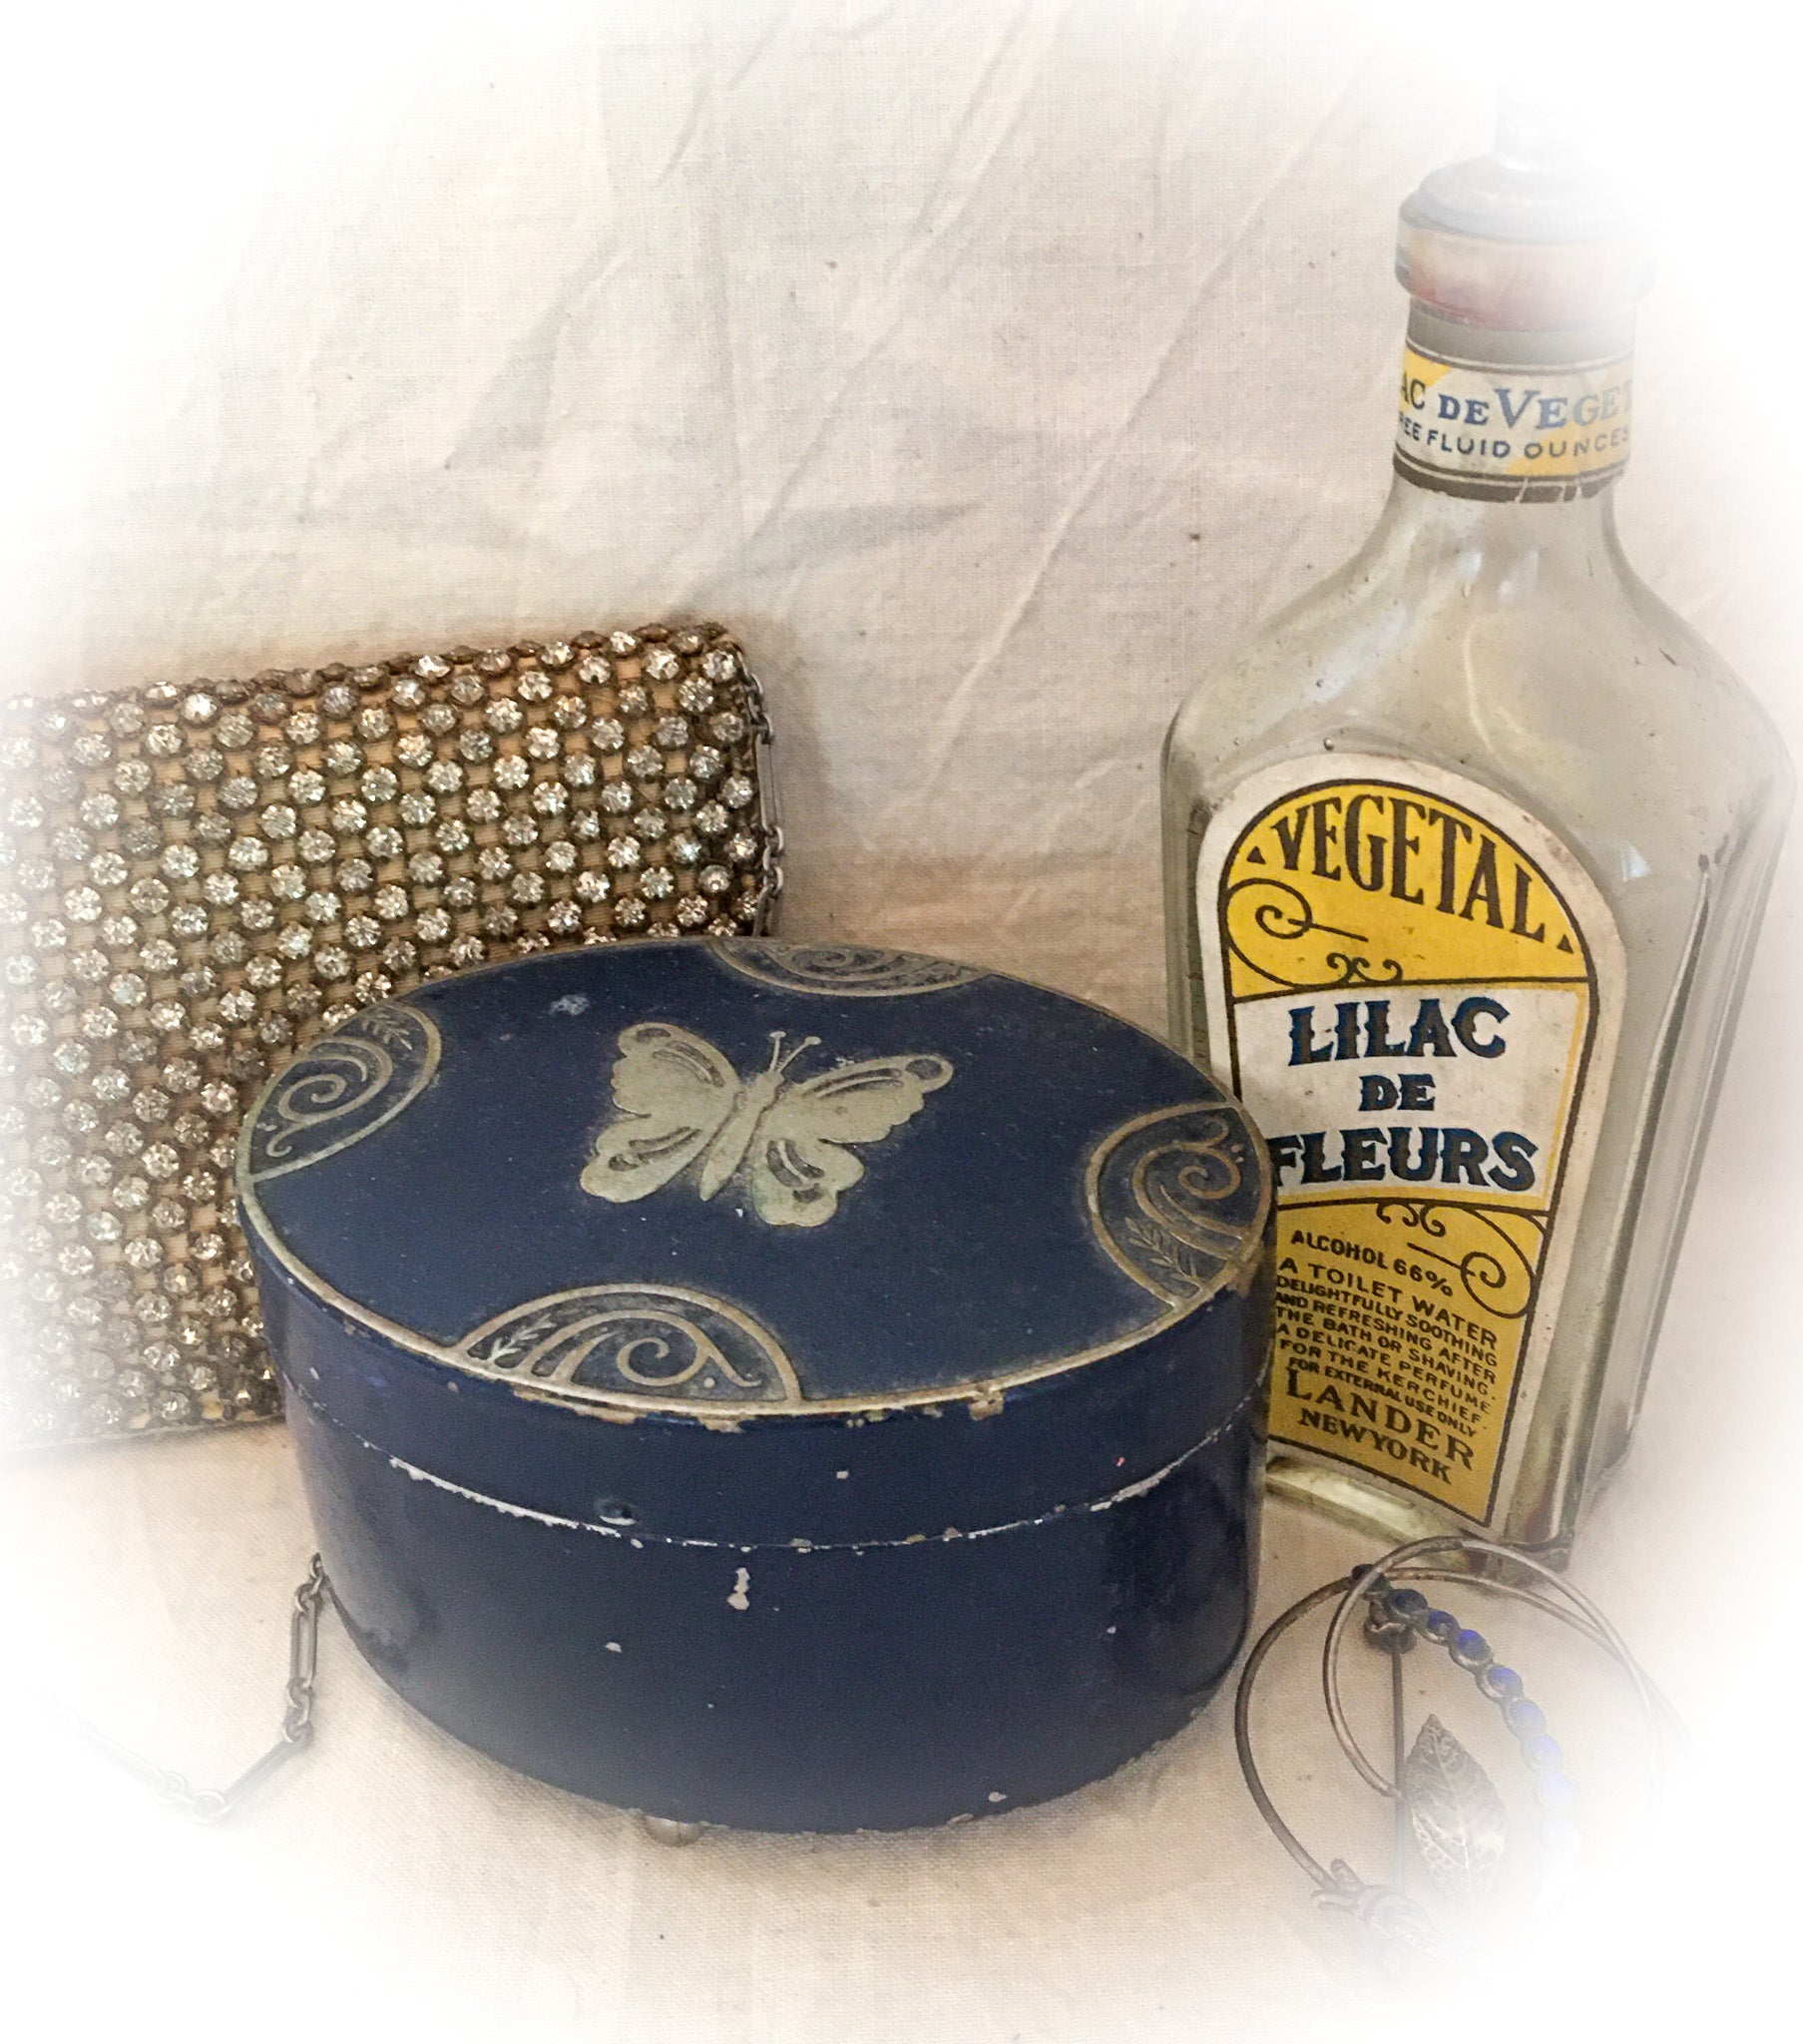 1929 Lucretia Vanderbilt Blue Enamel Powder Box